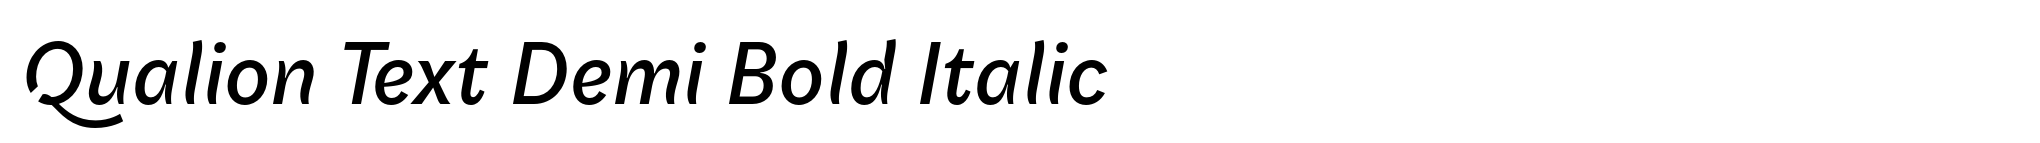 Qualion Text Demi Bold Italic image